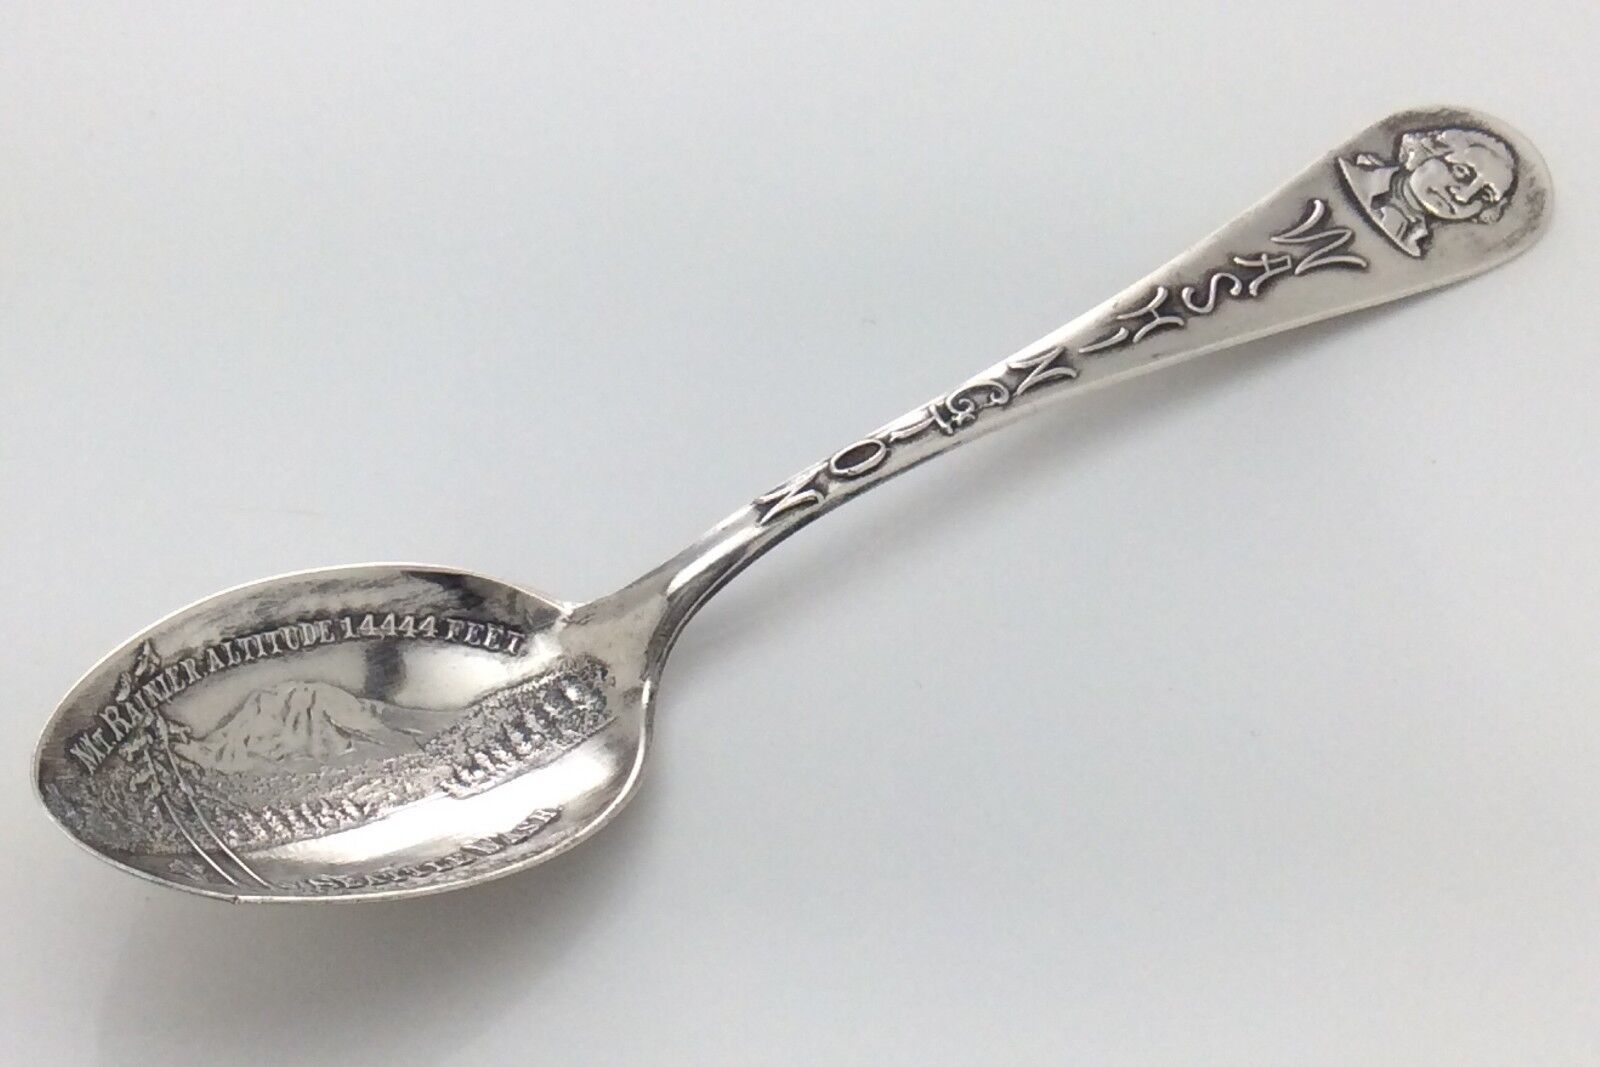 Washington MT Rainier Seattle Wash Spoon Sterling Silver 10.7g Grams F776